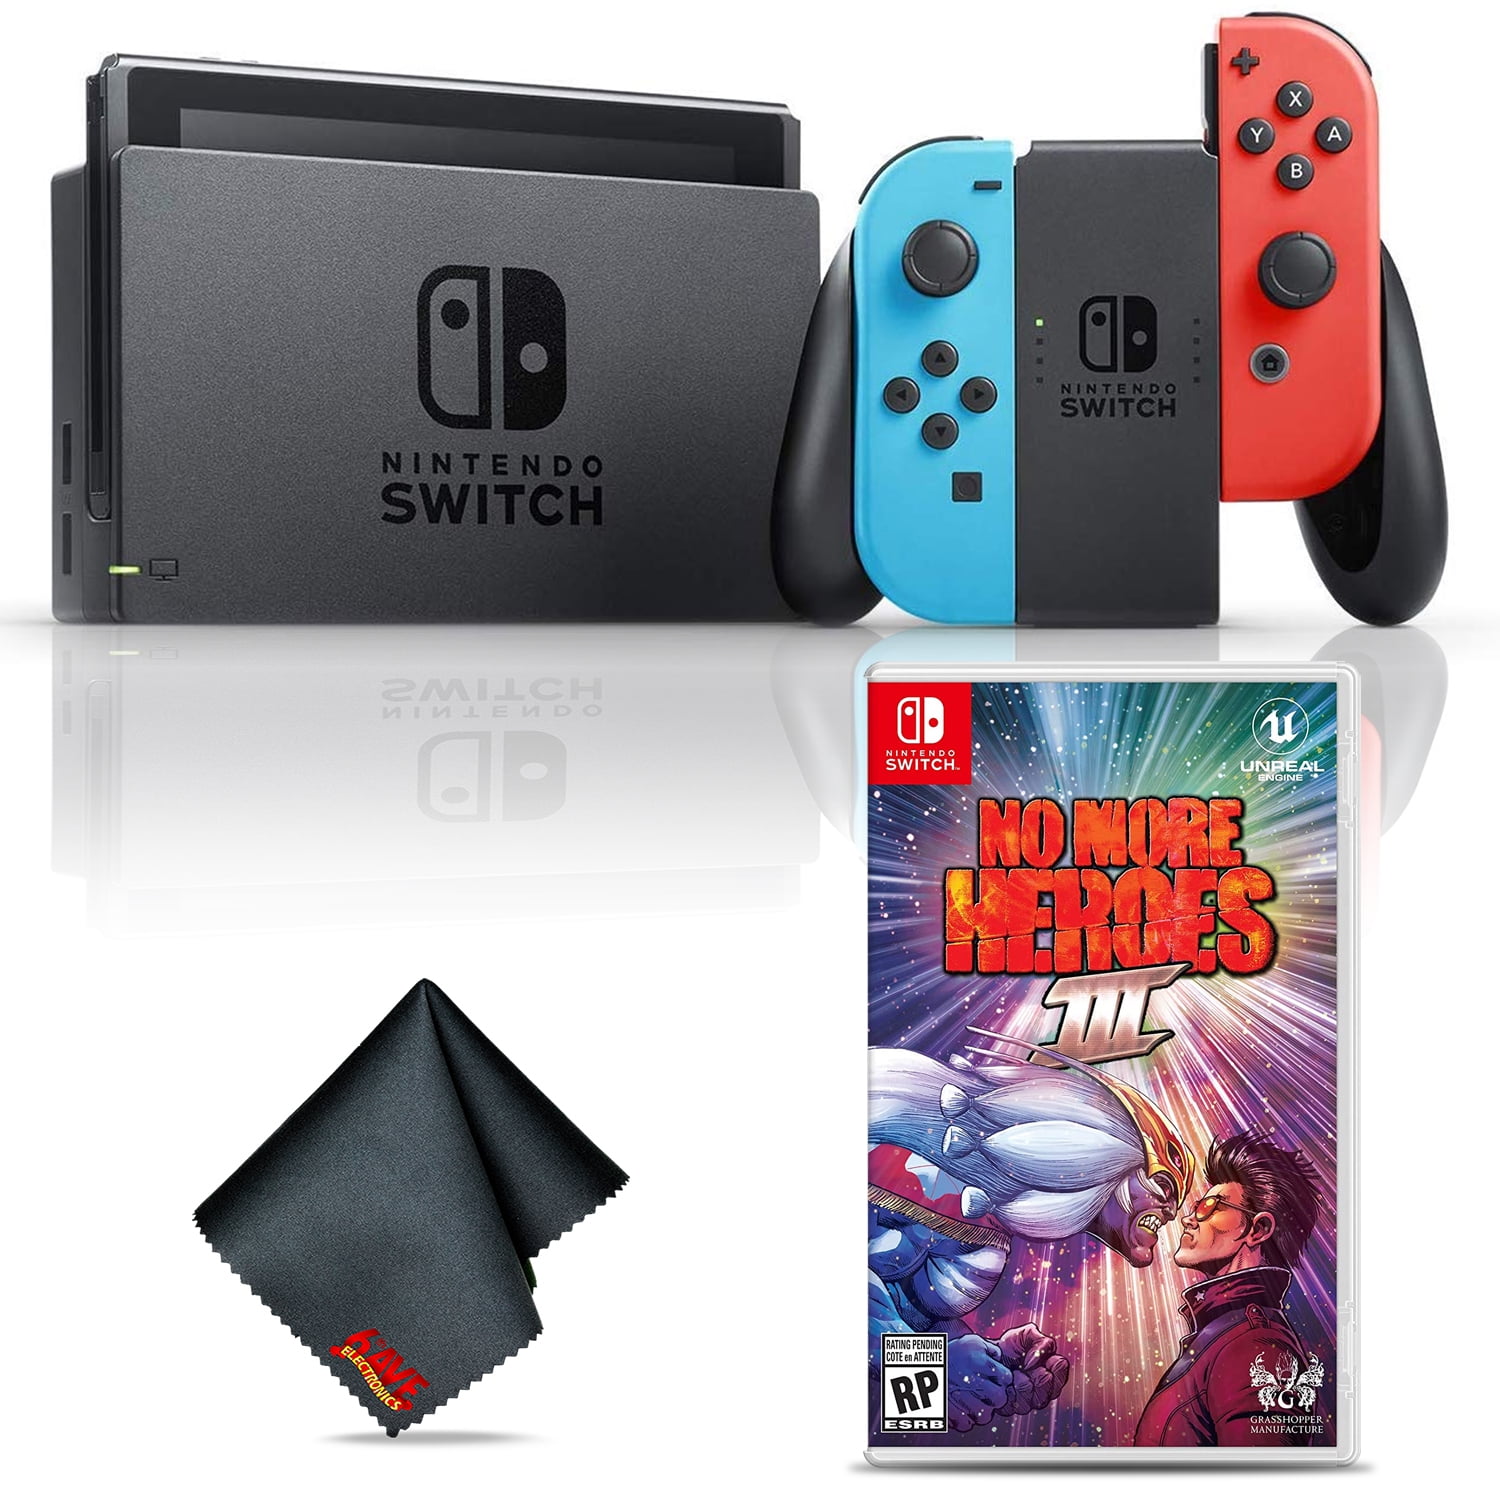 Nintendo Switch квадратный монолитный геймпад. Nintendo Switch Neon Blue Red купить 24 апреля. Установка чипа Нинтендо свитч rp2040zero. Nintendo switch neon